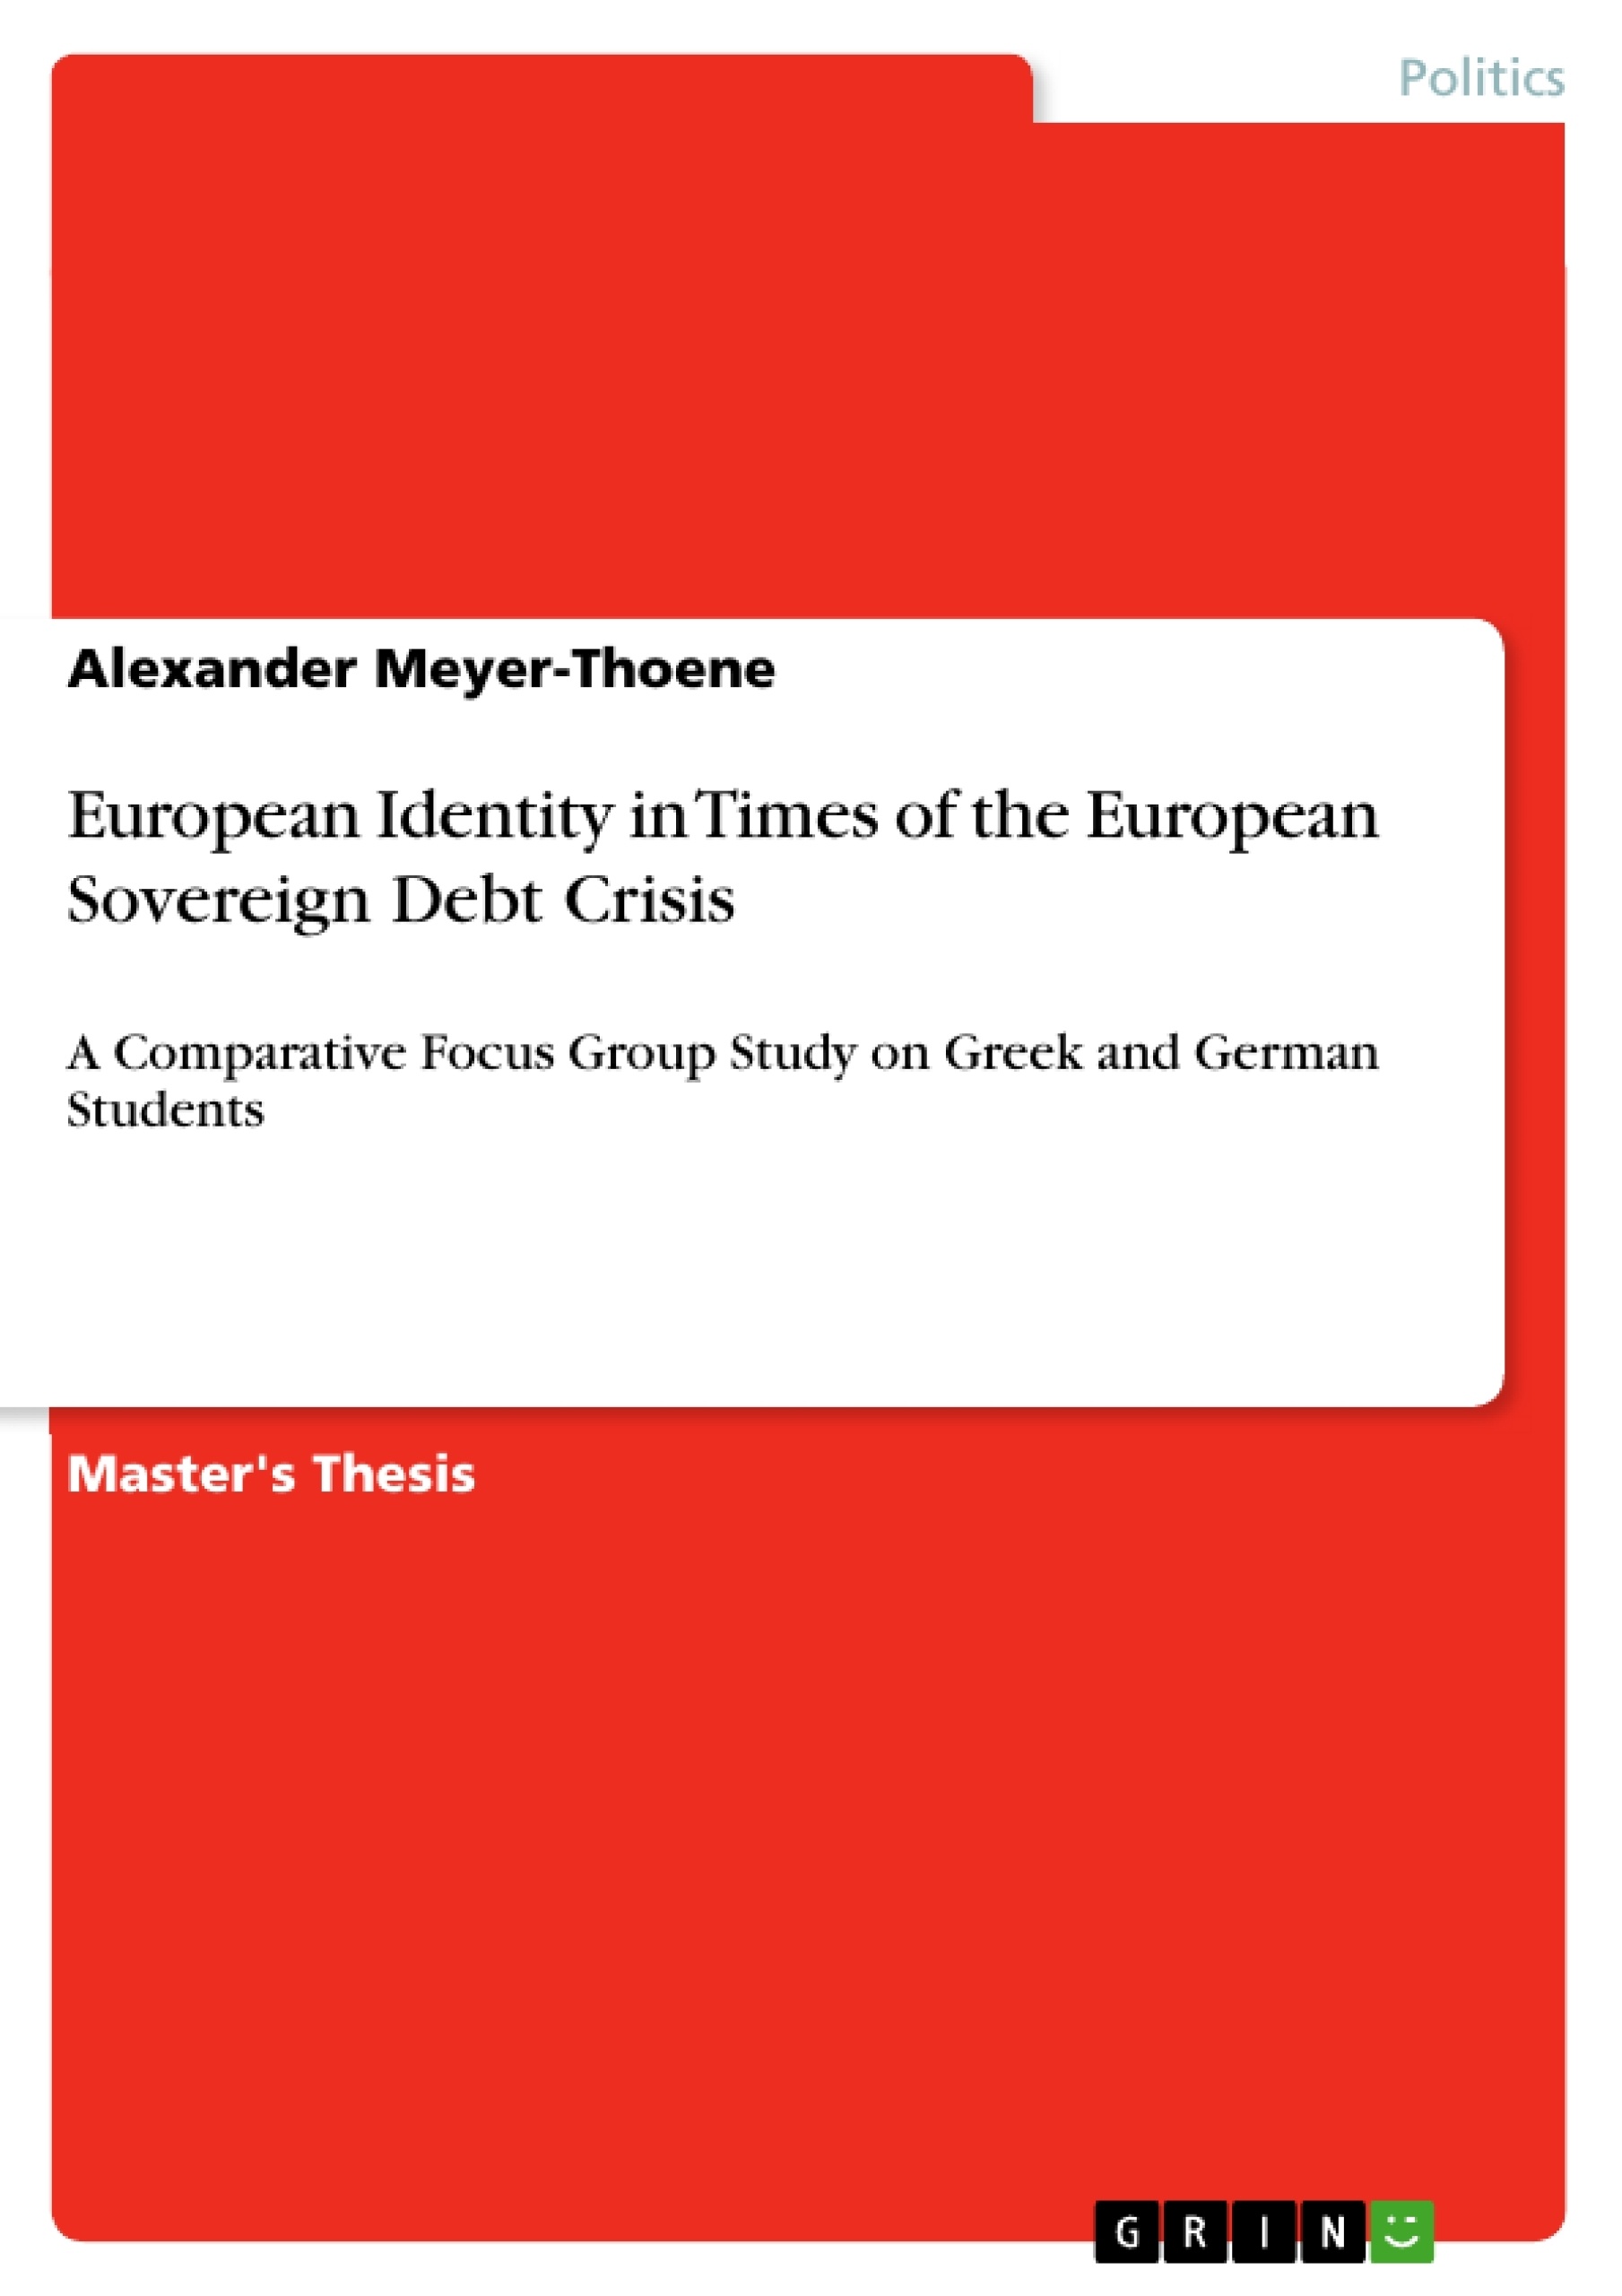 Title: European Identity in Times of the European Sovereign Debt Crisis